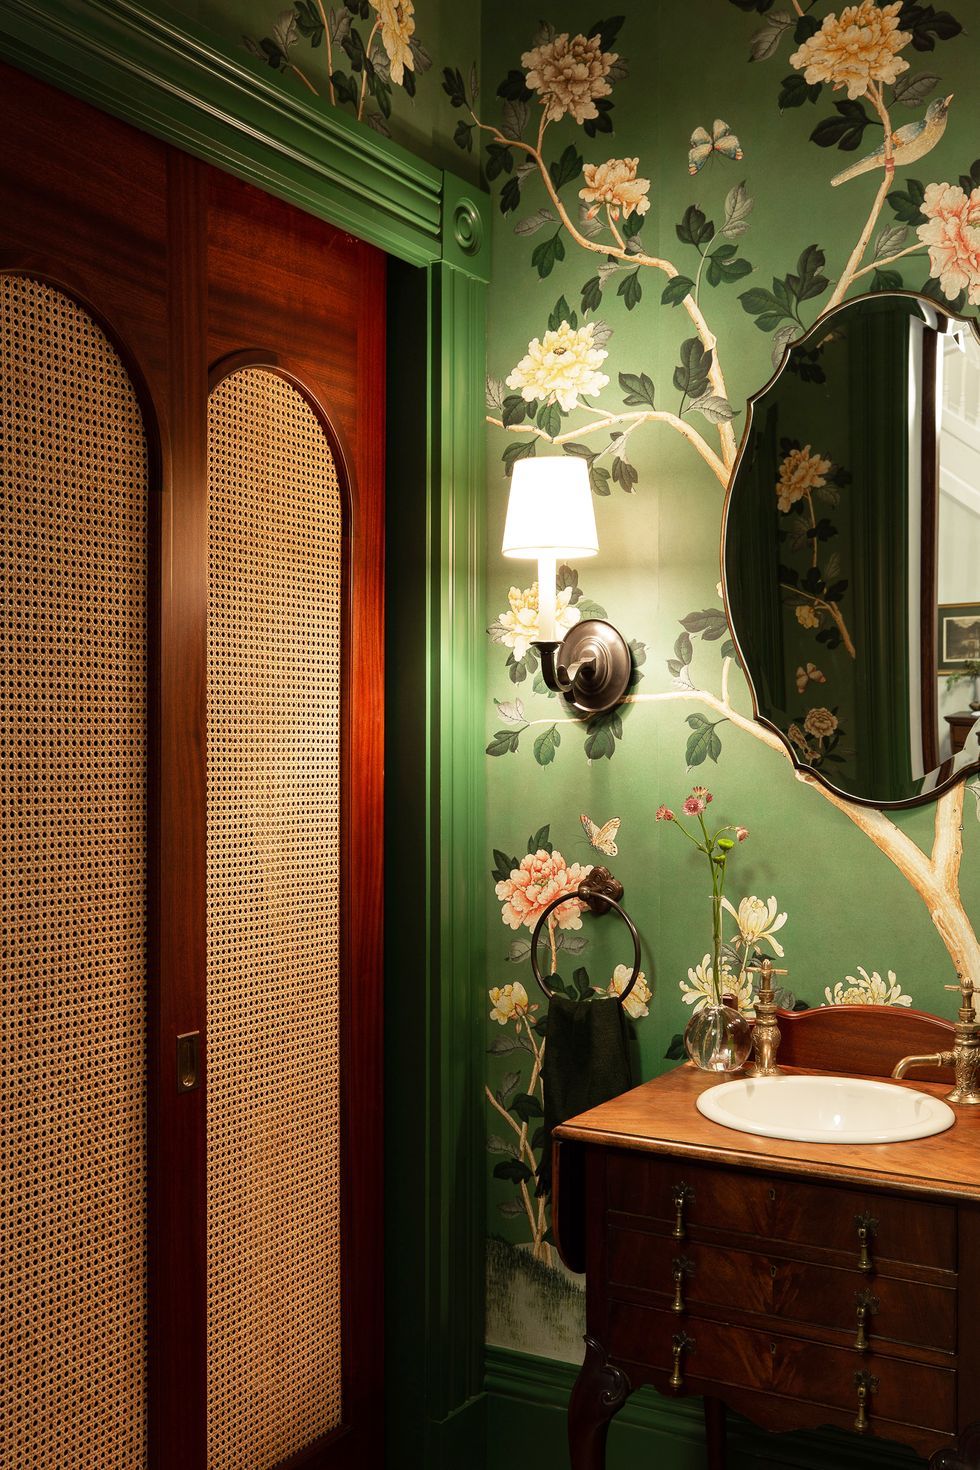 13 Bathroom Wallpaper Ideas Thatll Inspire You to Go Bright and Bold   HGTV Canada